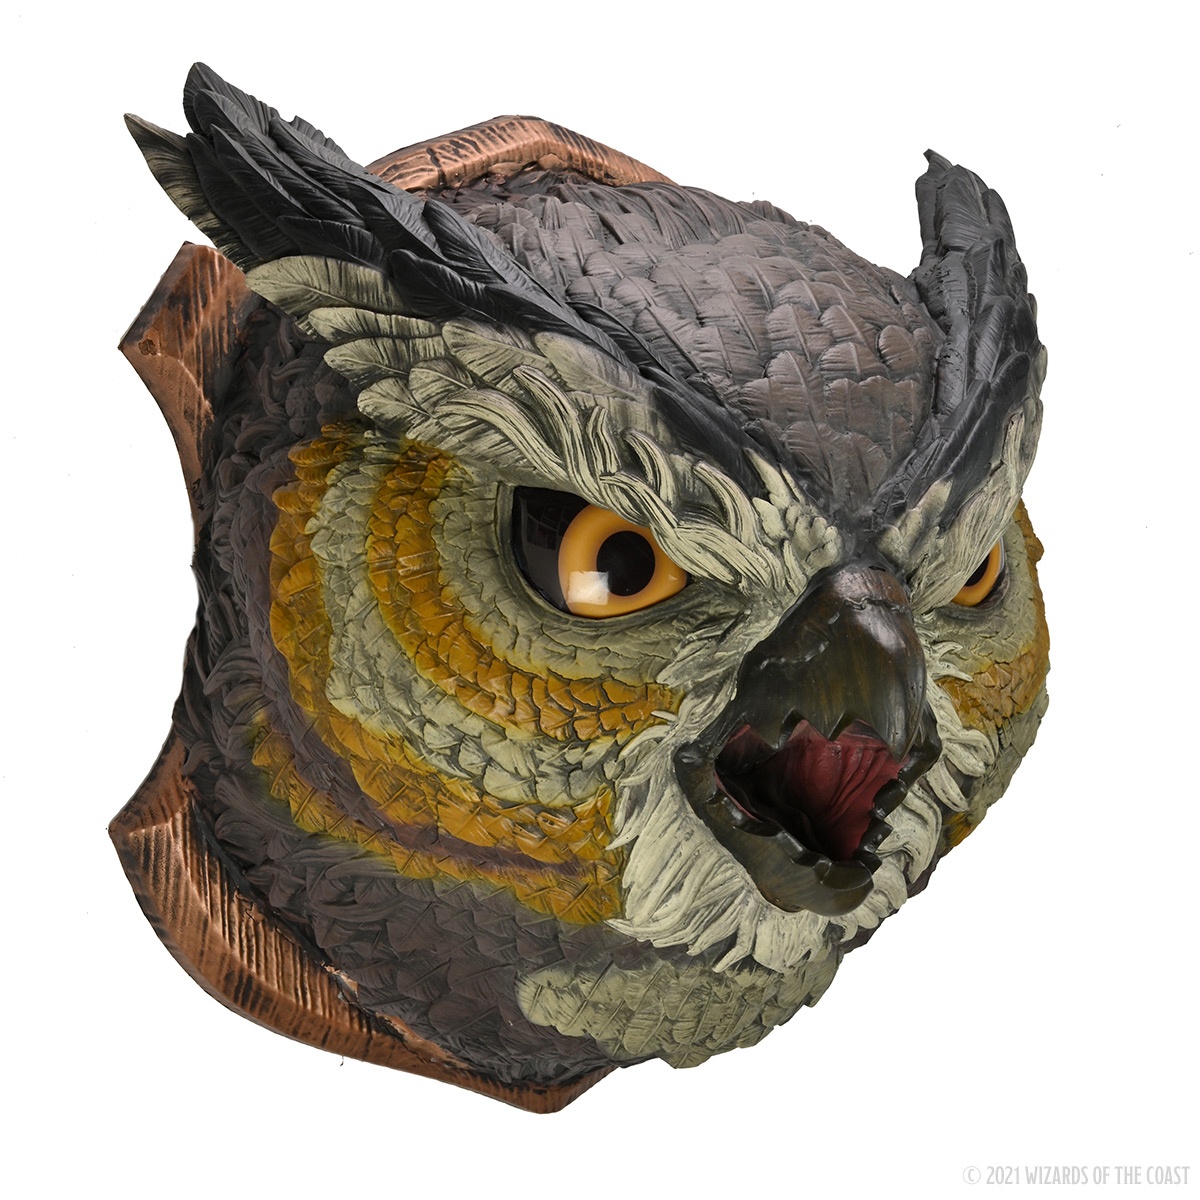 Dungeons & Dragons Owlbear Trophy Plaque-1641462954.jpg